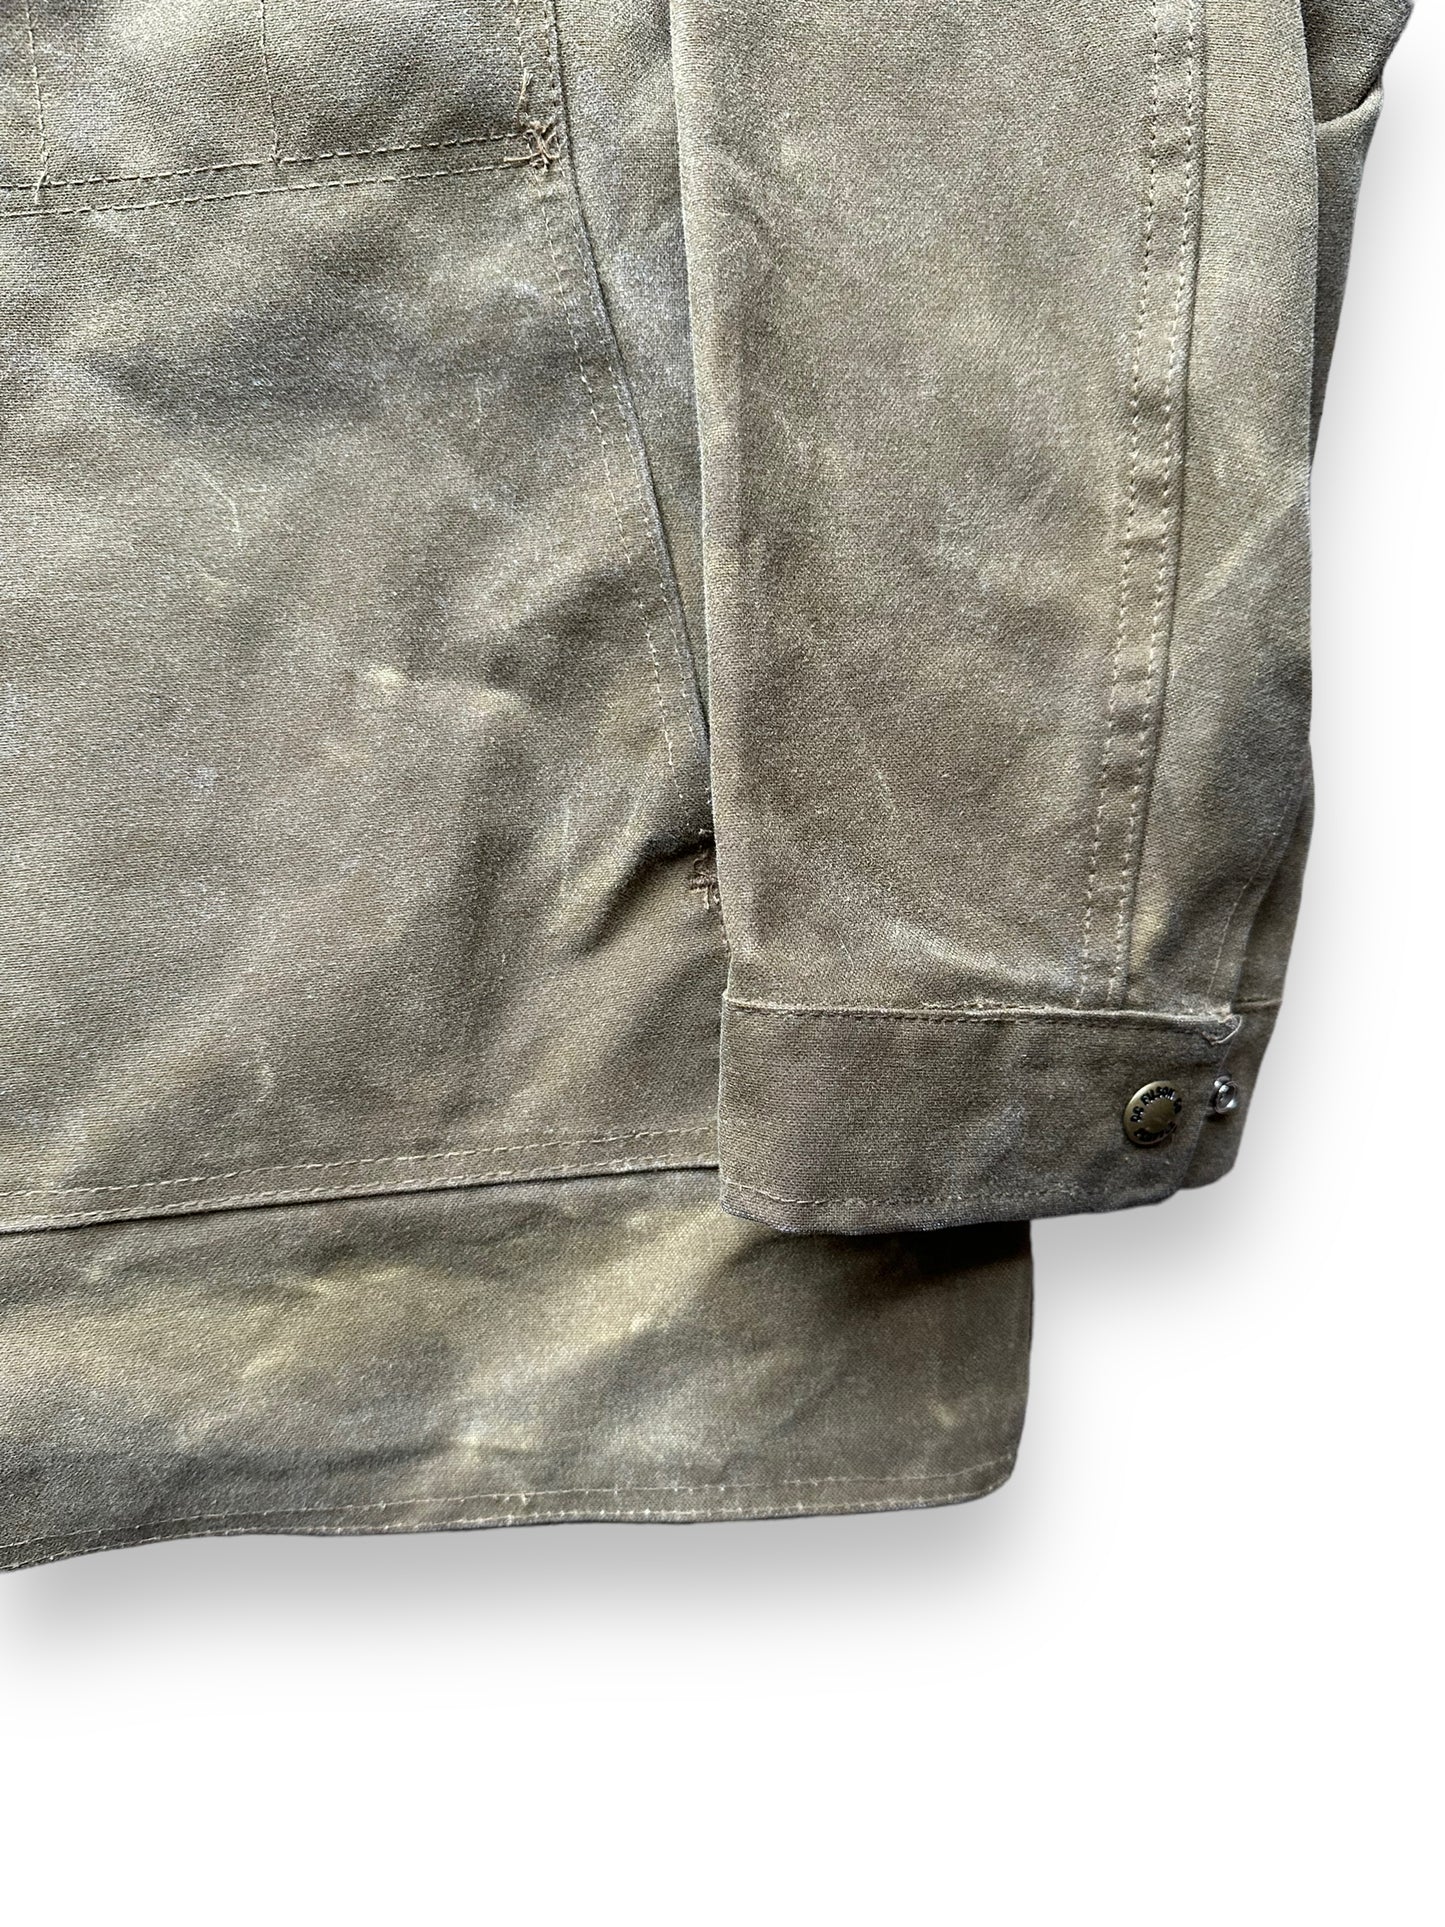 Left Cuff View on Filson Tin Cloth Jacket SZ XL |  Barn Owl Vintage Goods | Filson Workwear Seattle